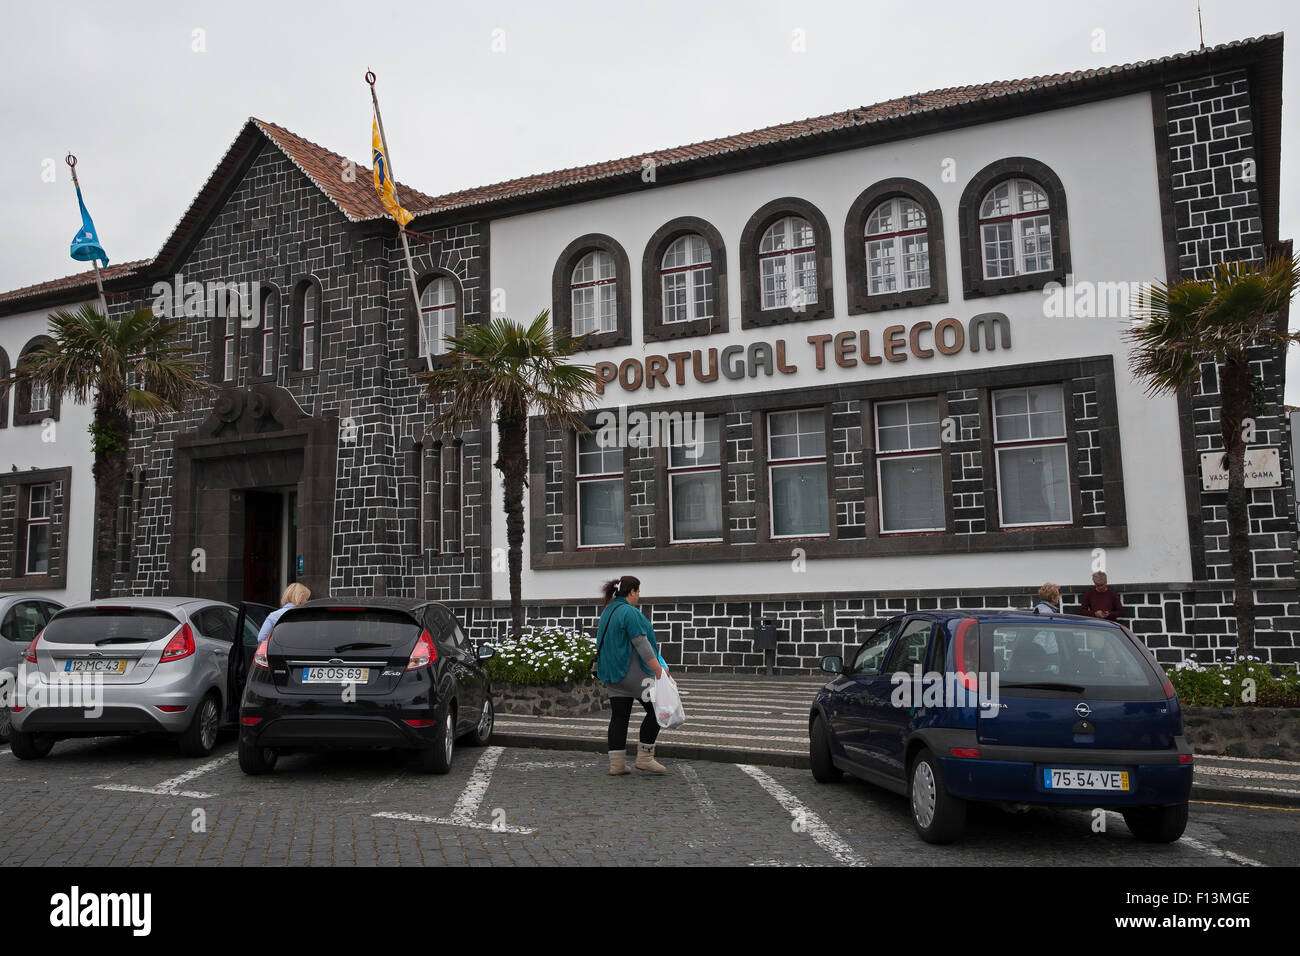 Portugal Telecom building in Sao Miguel azores Stock Photo